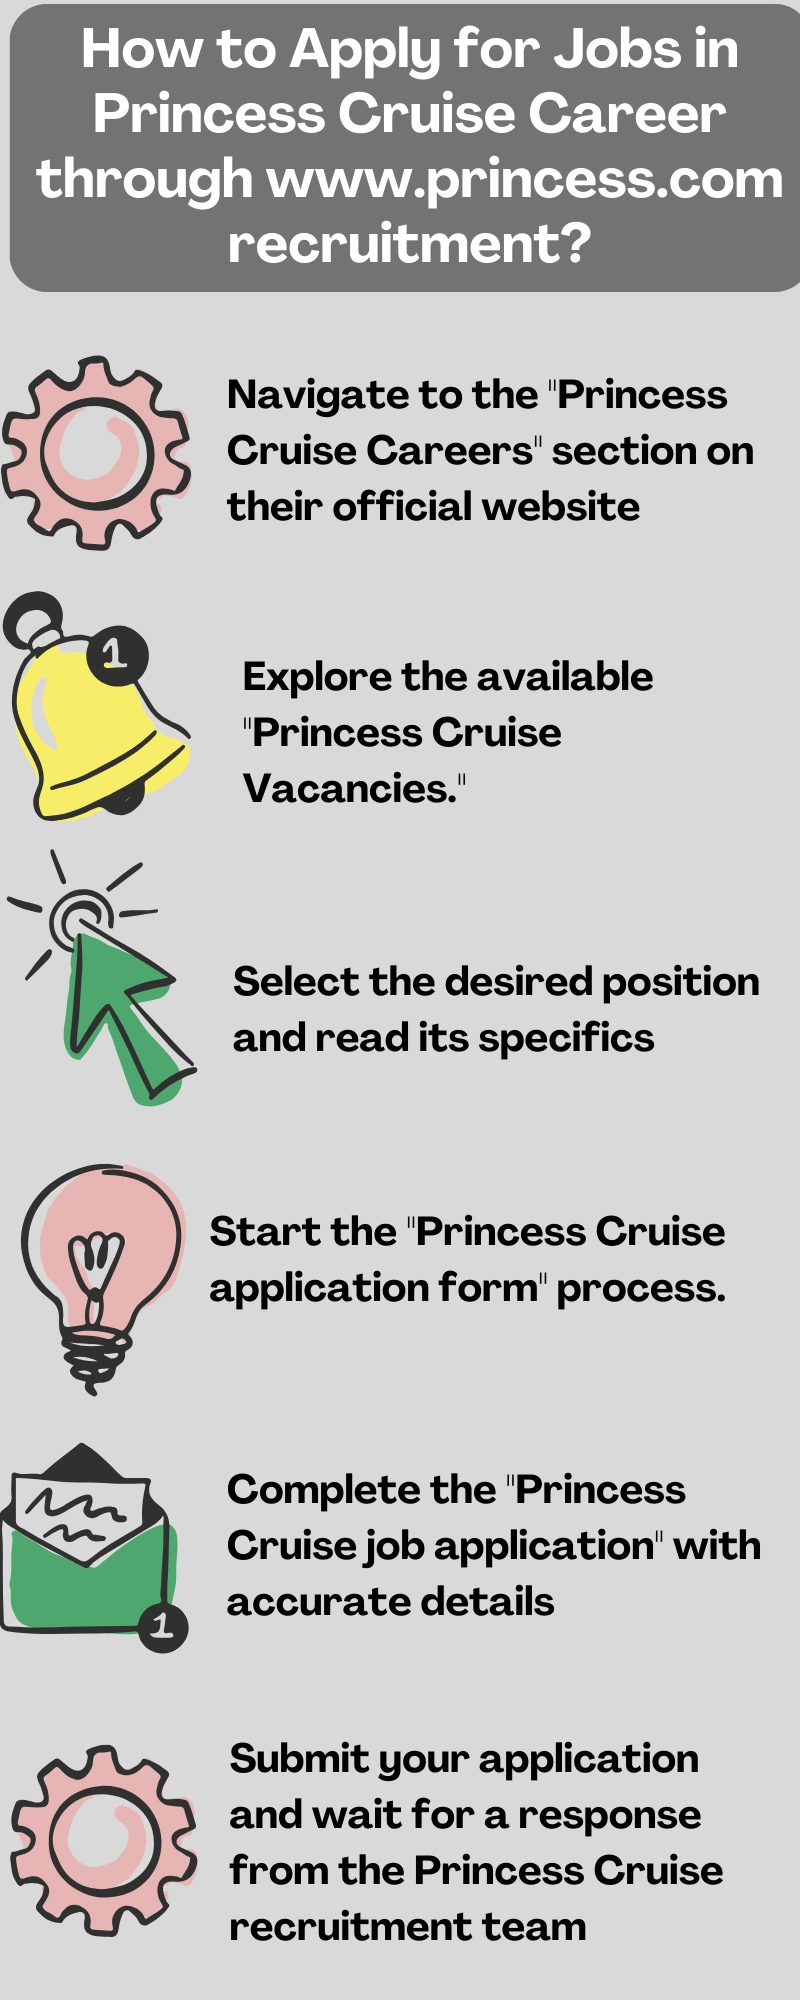 How to Apply for Jobs in Princess Cruise Career through www.princess.com recruitment?